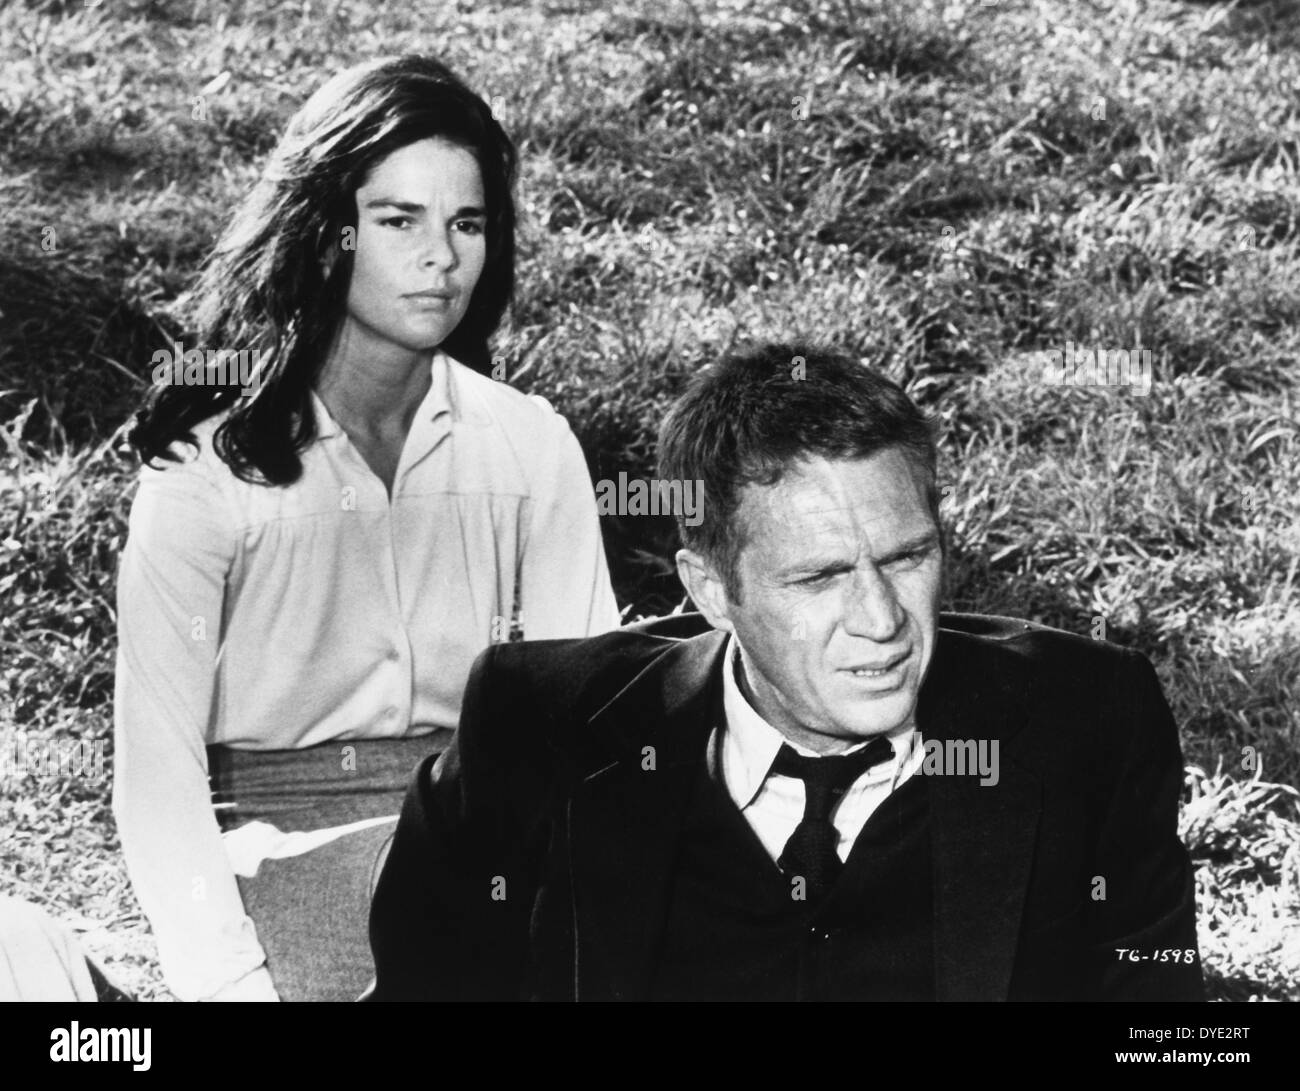 Ali MacGraw und Steve McQueen, am Set des Films "The Getaway", 1972 Stockfoto